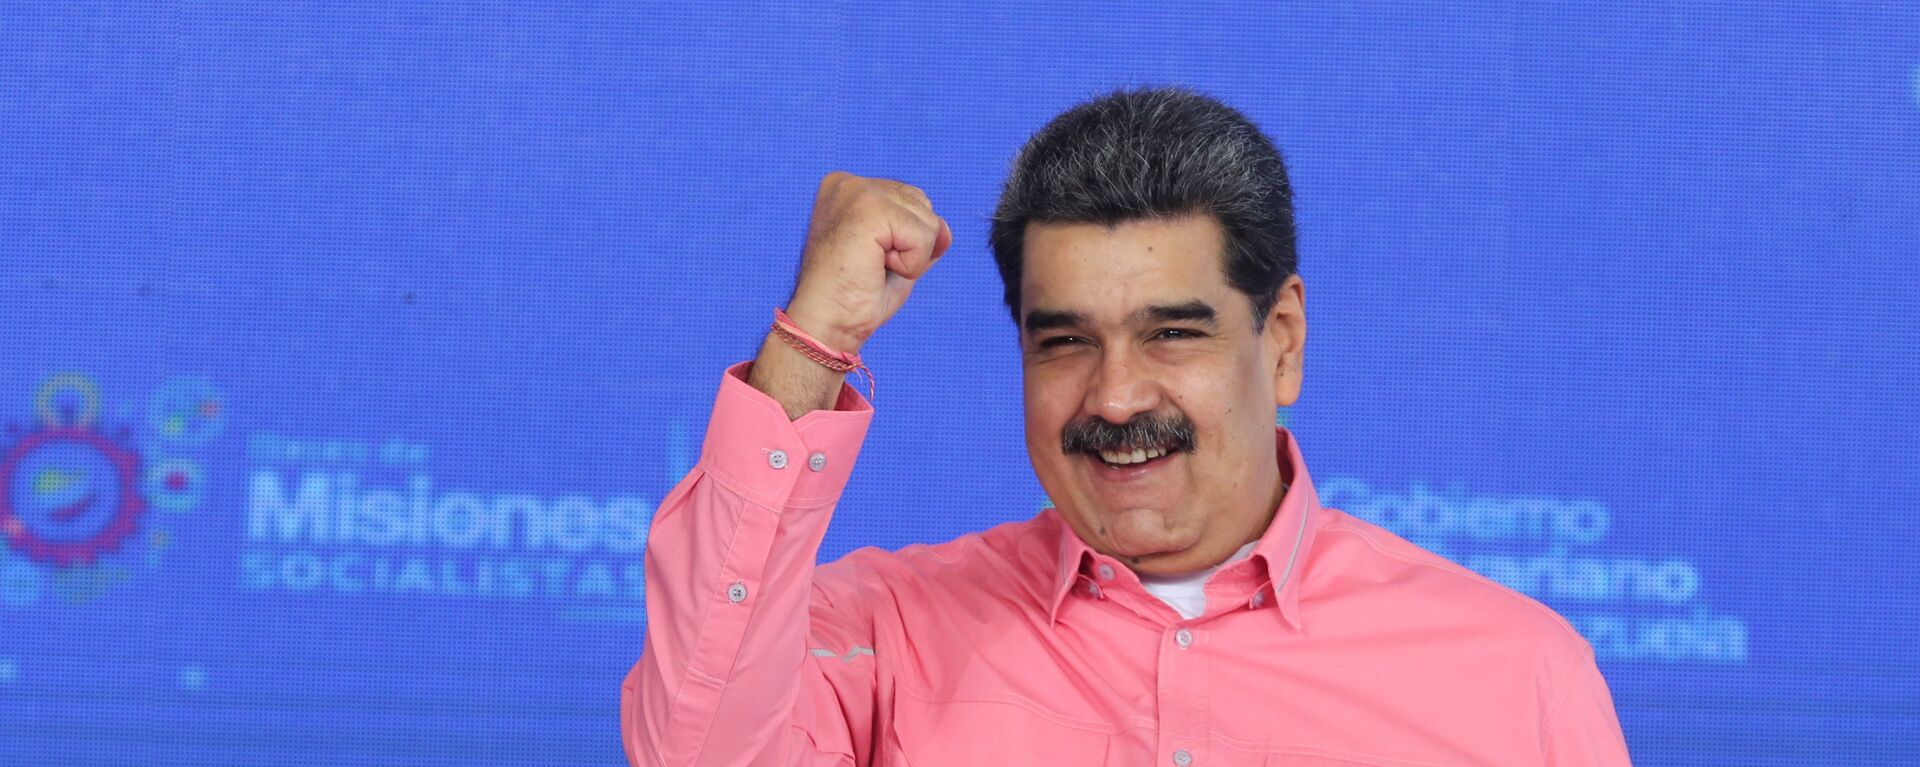 Venezuelan President Nicolas Maduro gestures during an event in Caracas, Venezuela May 14, 2021. - Sputnik International, 1920, 19.09.2021